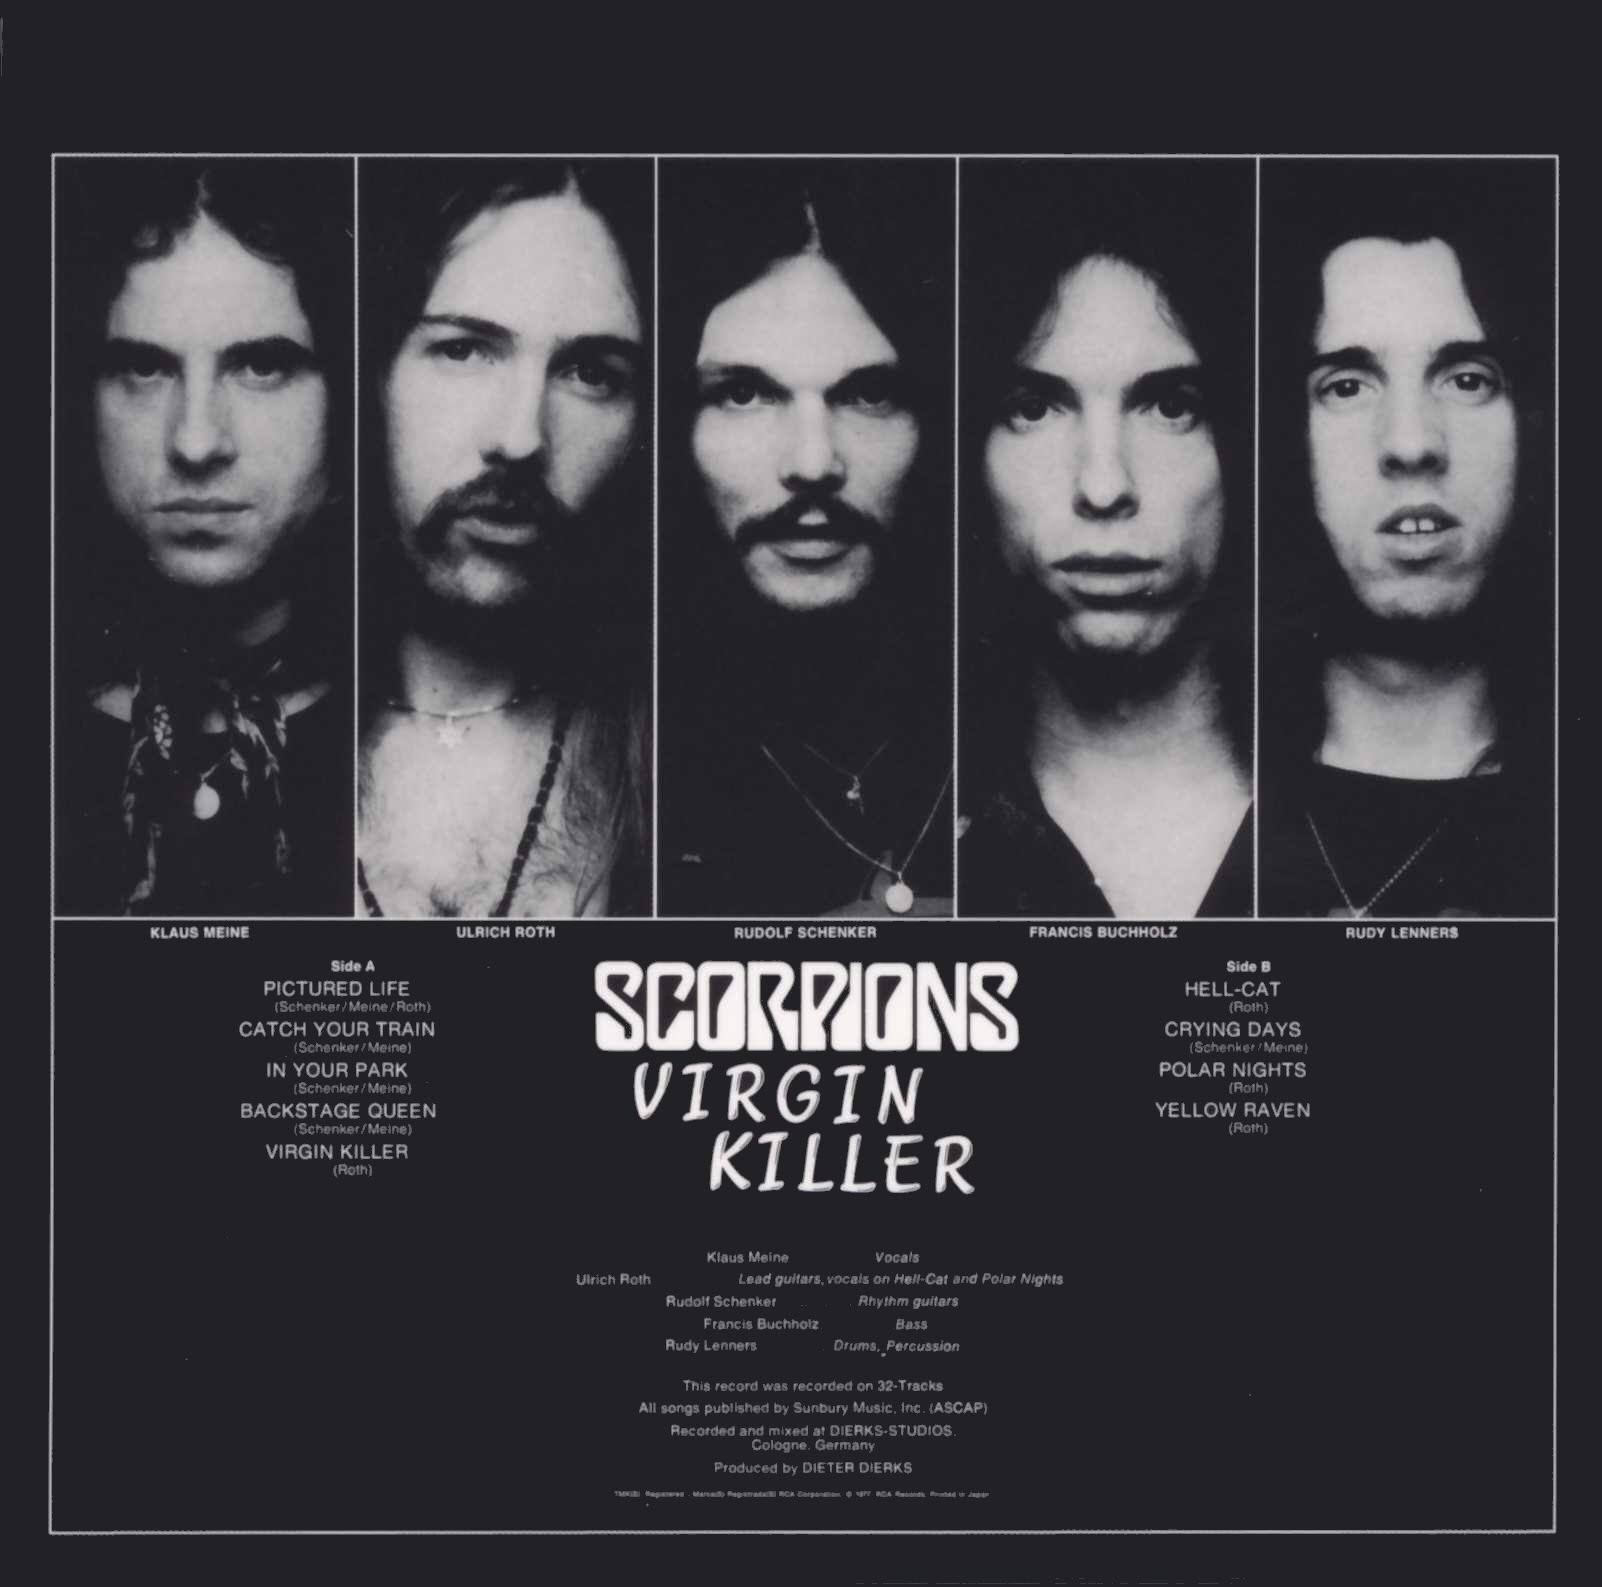 Scorpions - Virgin Killer with lyrics on description